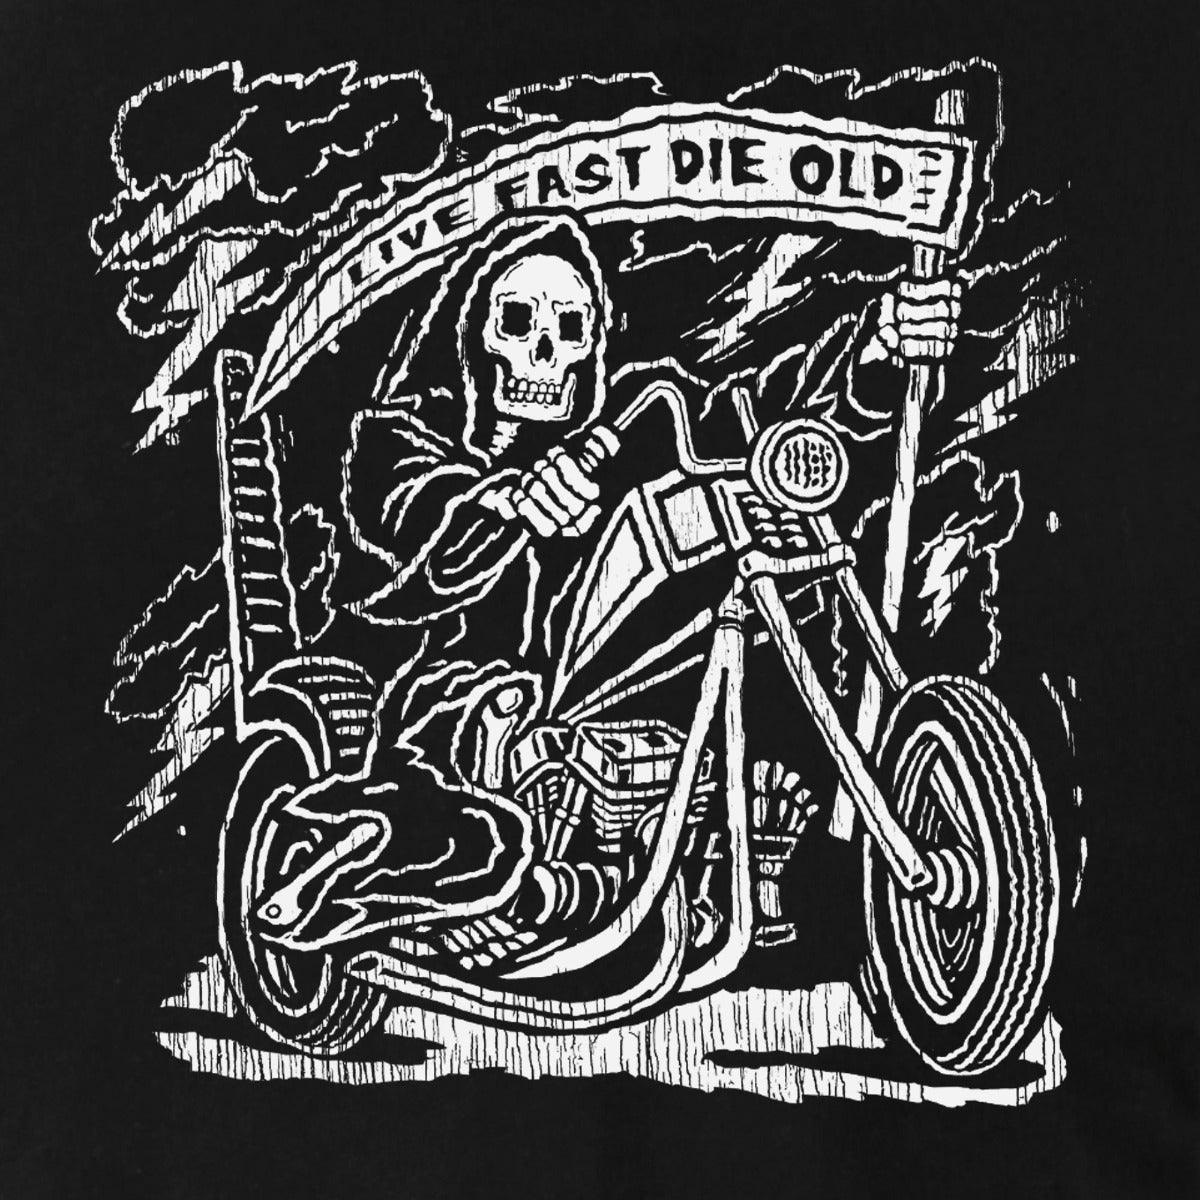 Hot Leathers Men's Vintage Reaper T Shirt - American Legend Rider